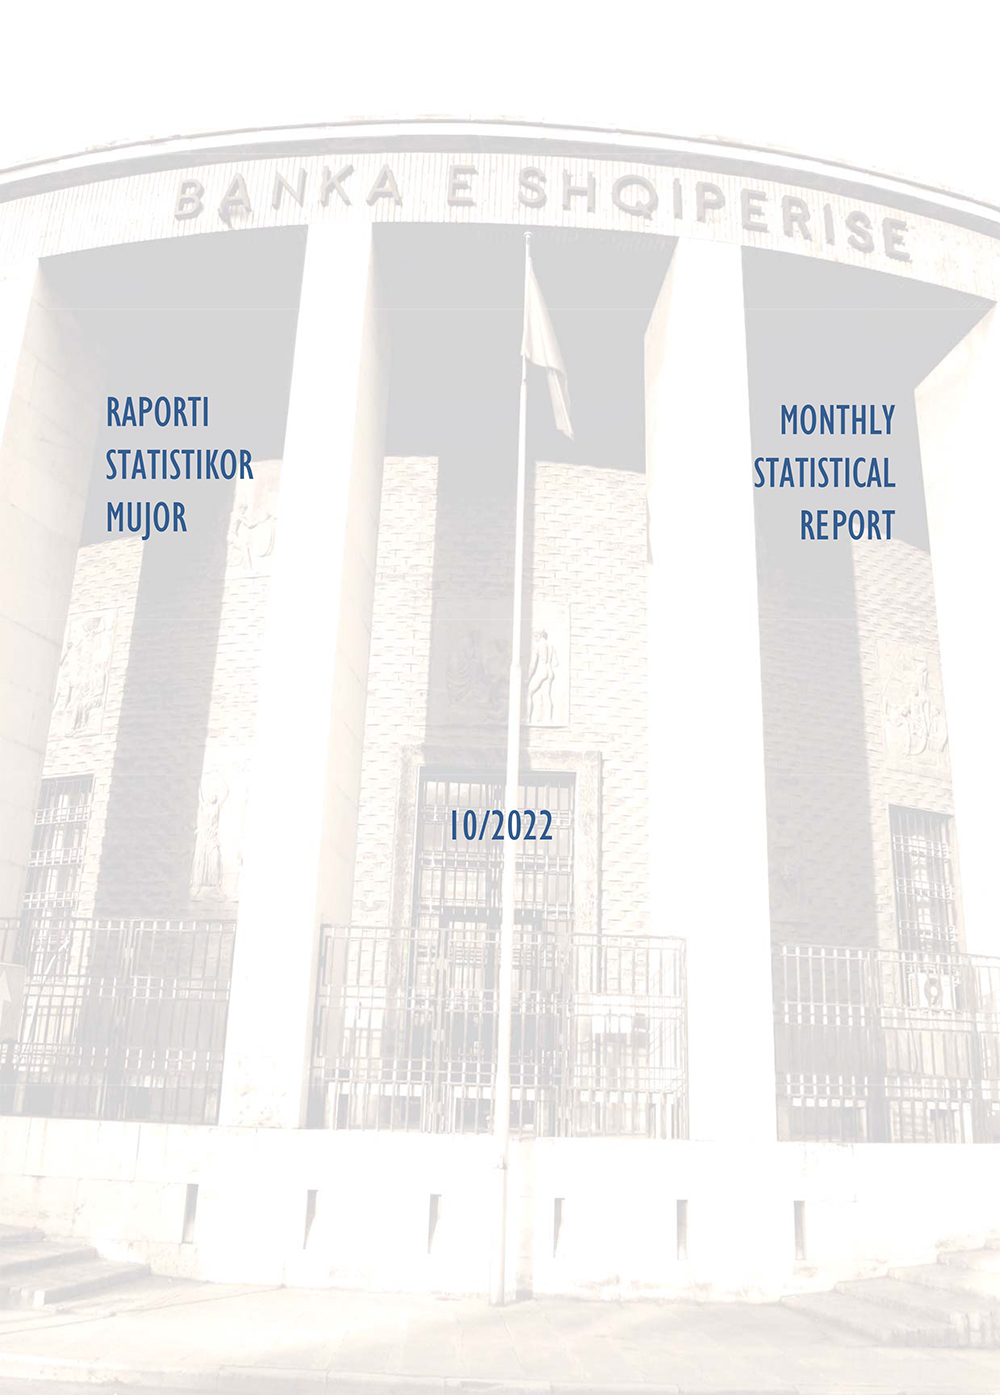 Raporti Statistikor - tetor 2022